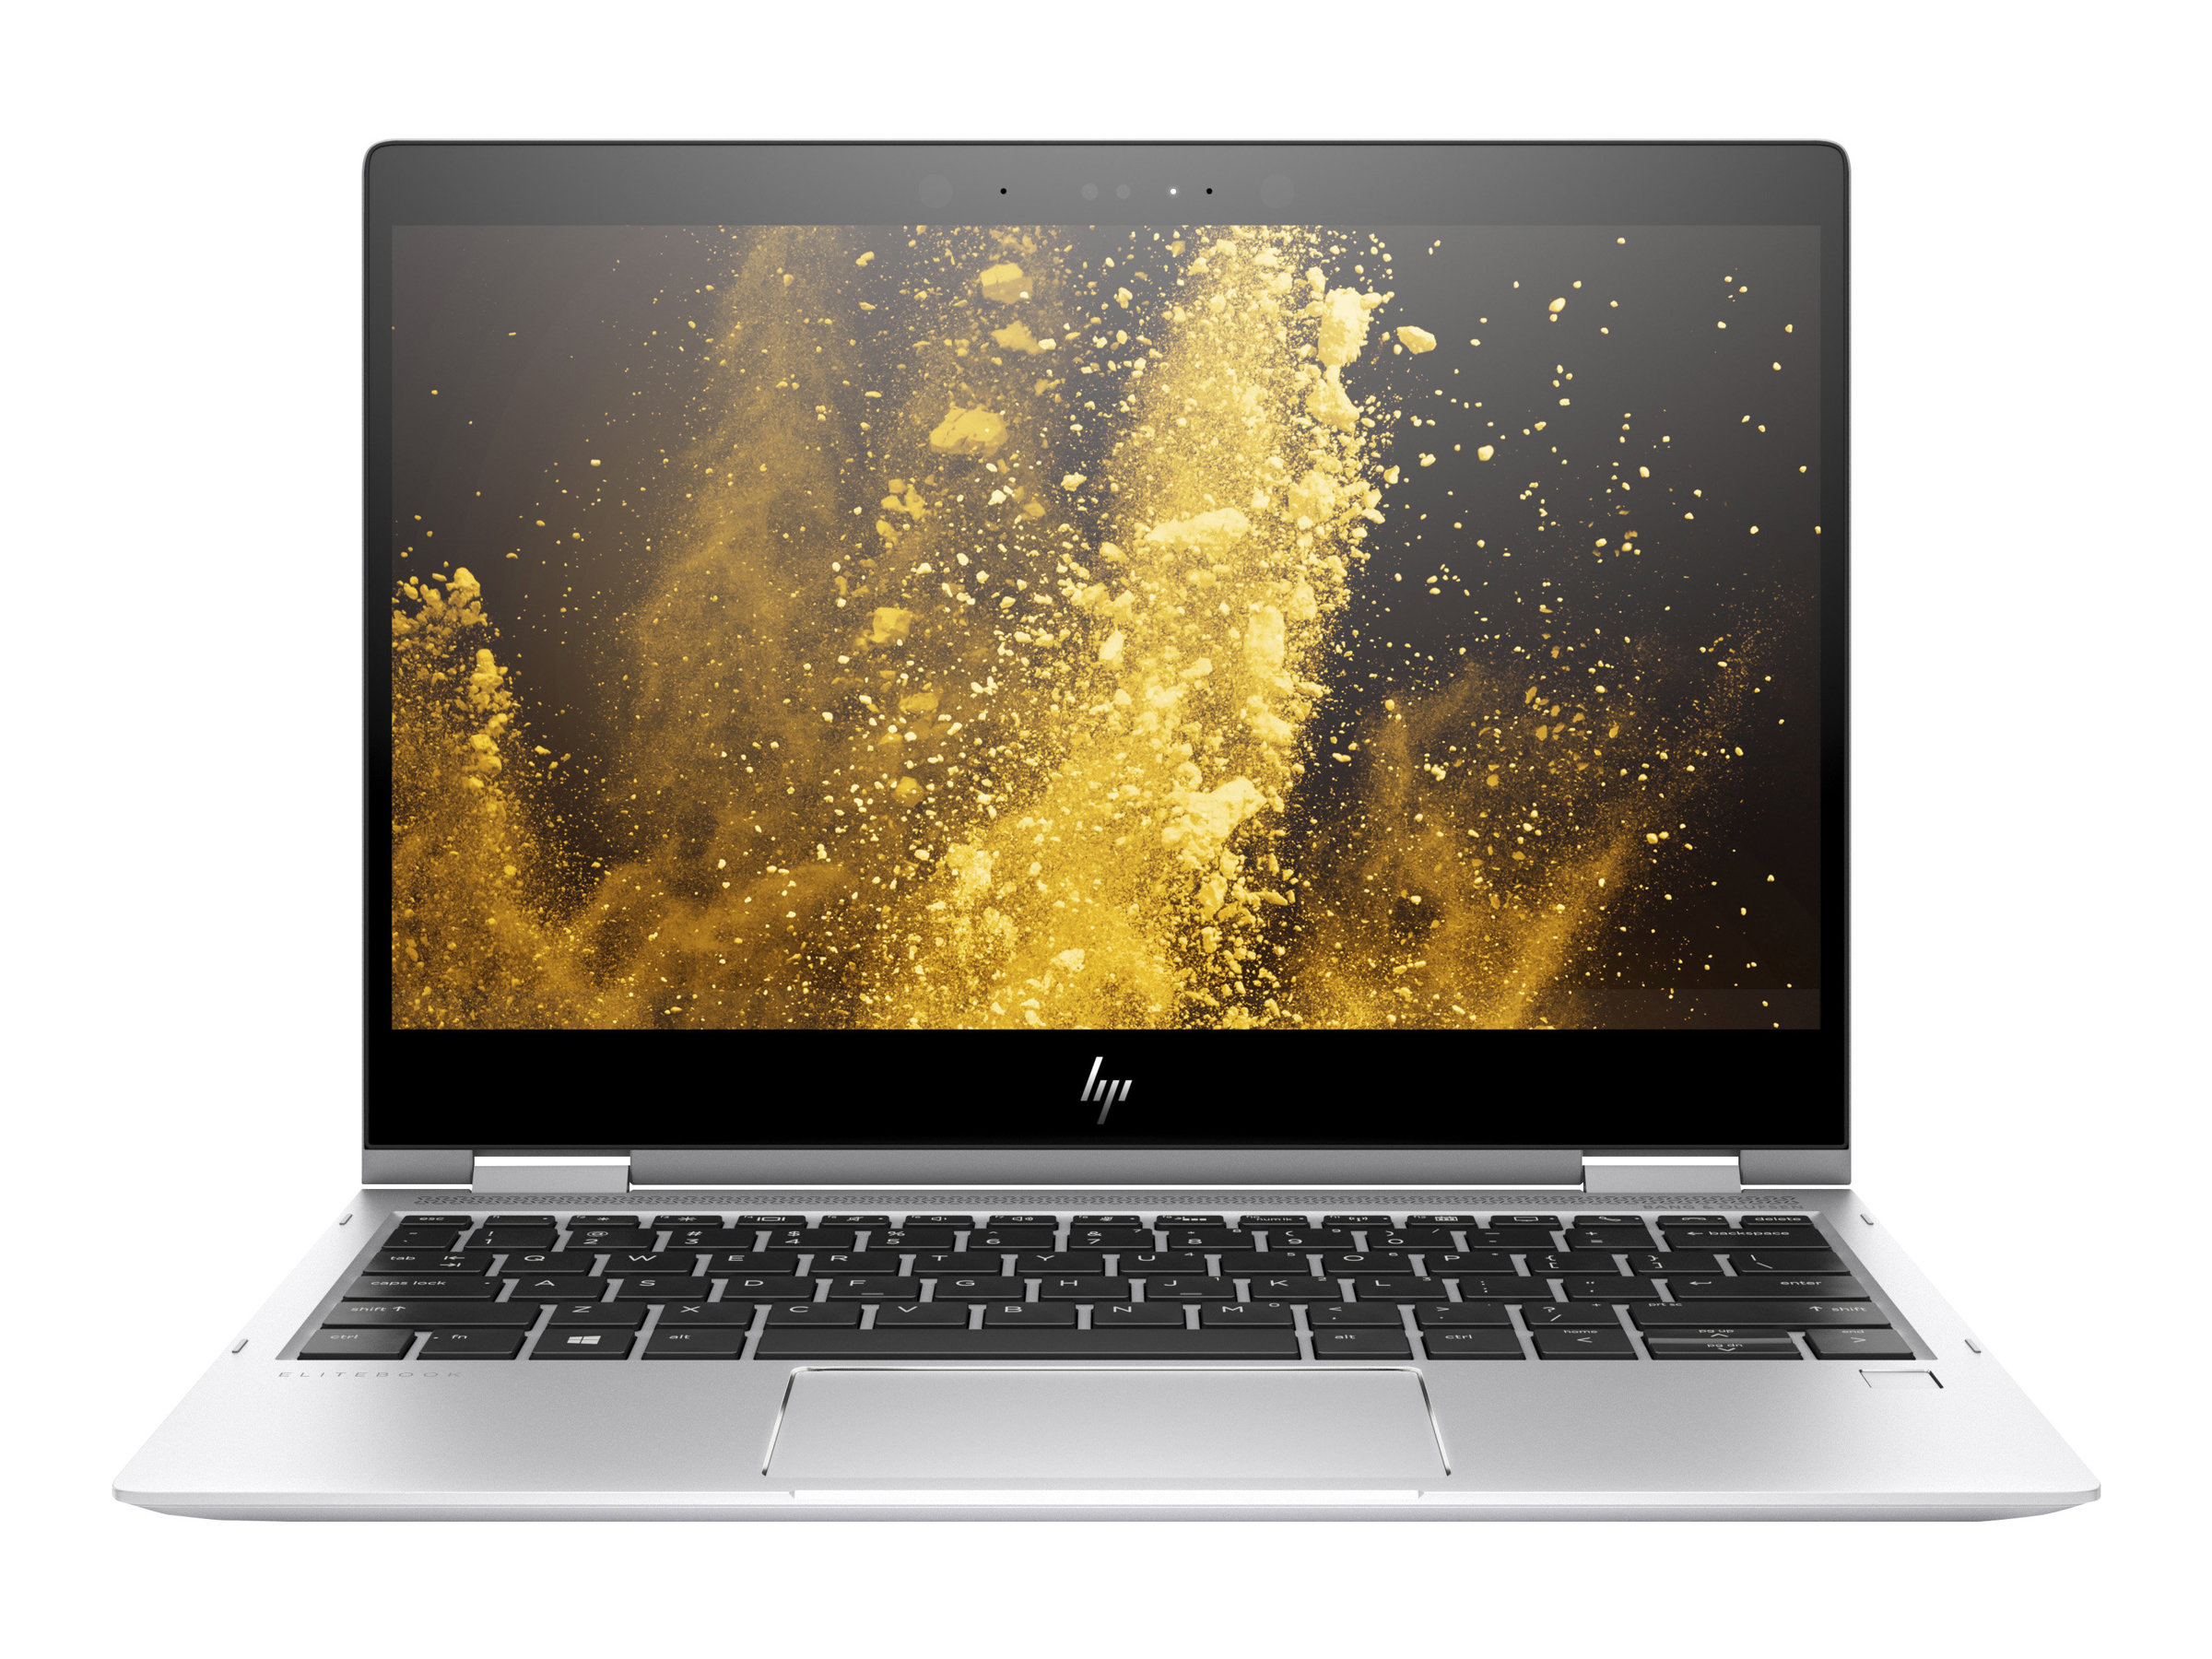 HP EliteBook x360 (1020 G2 Notebook)